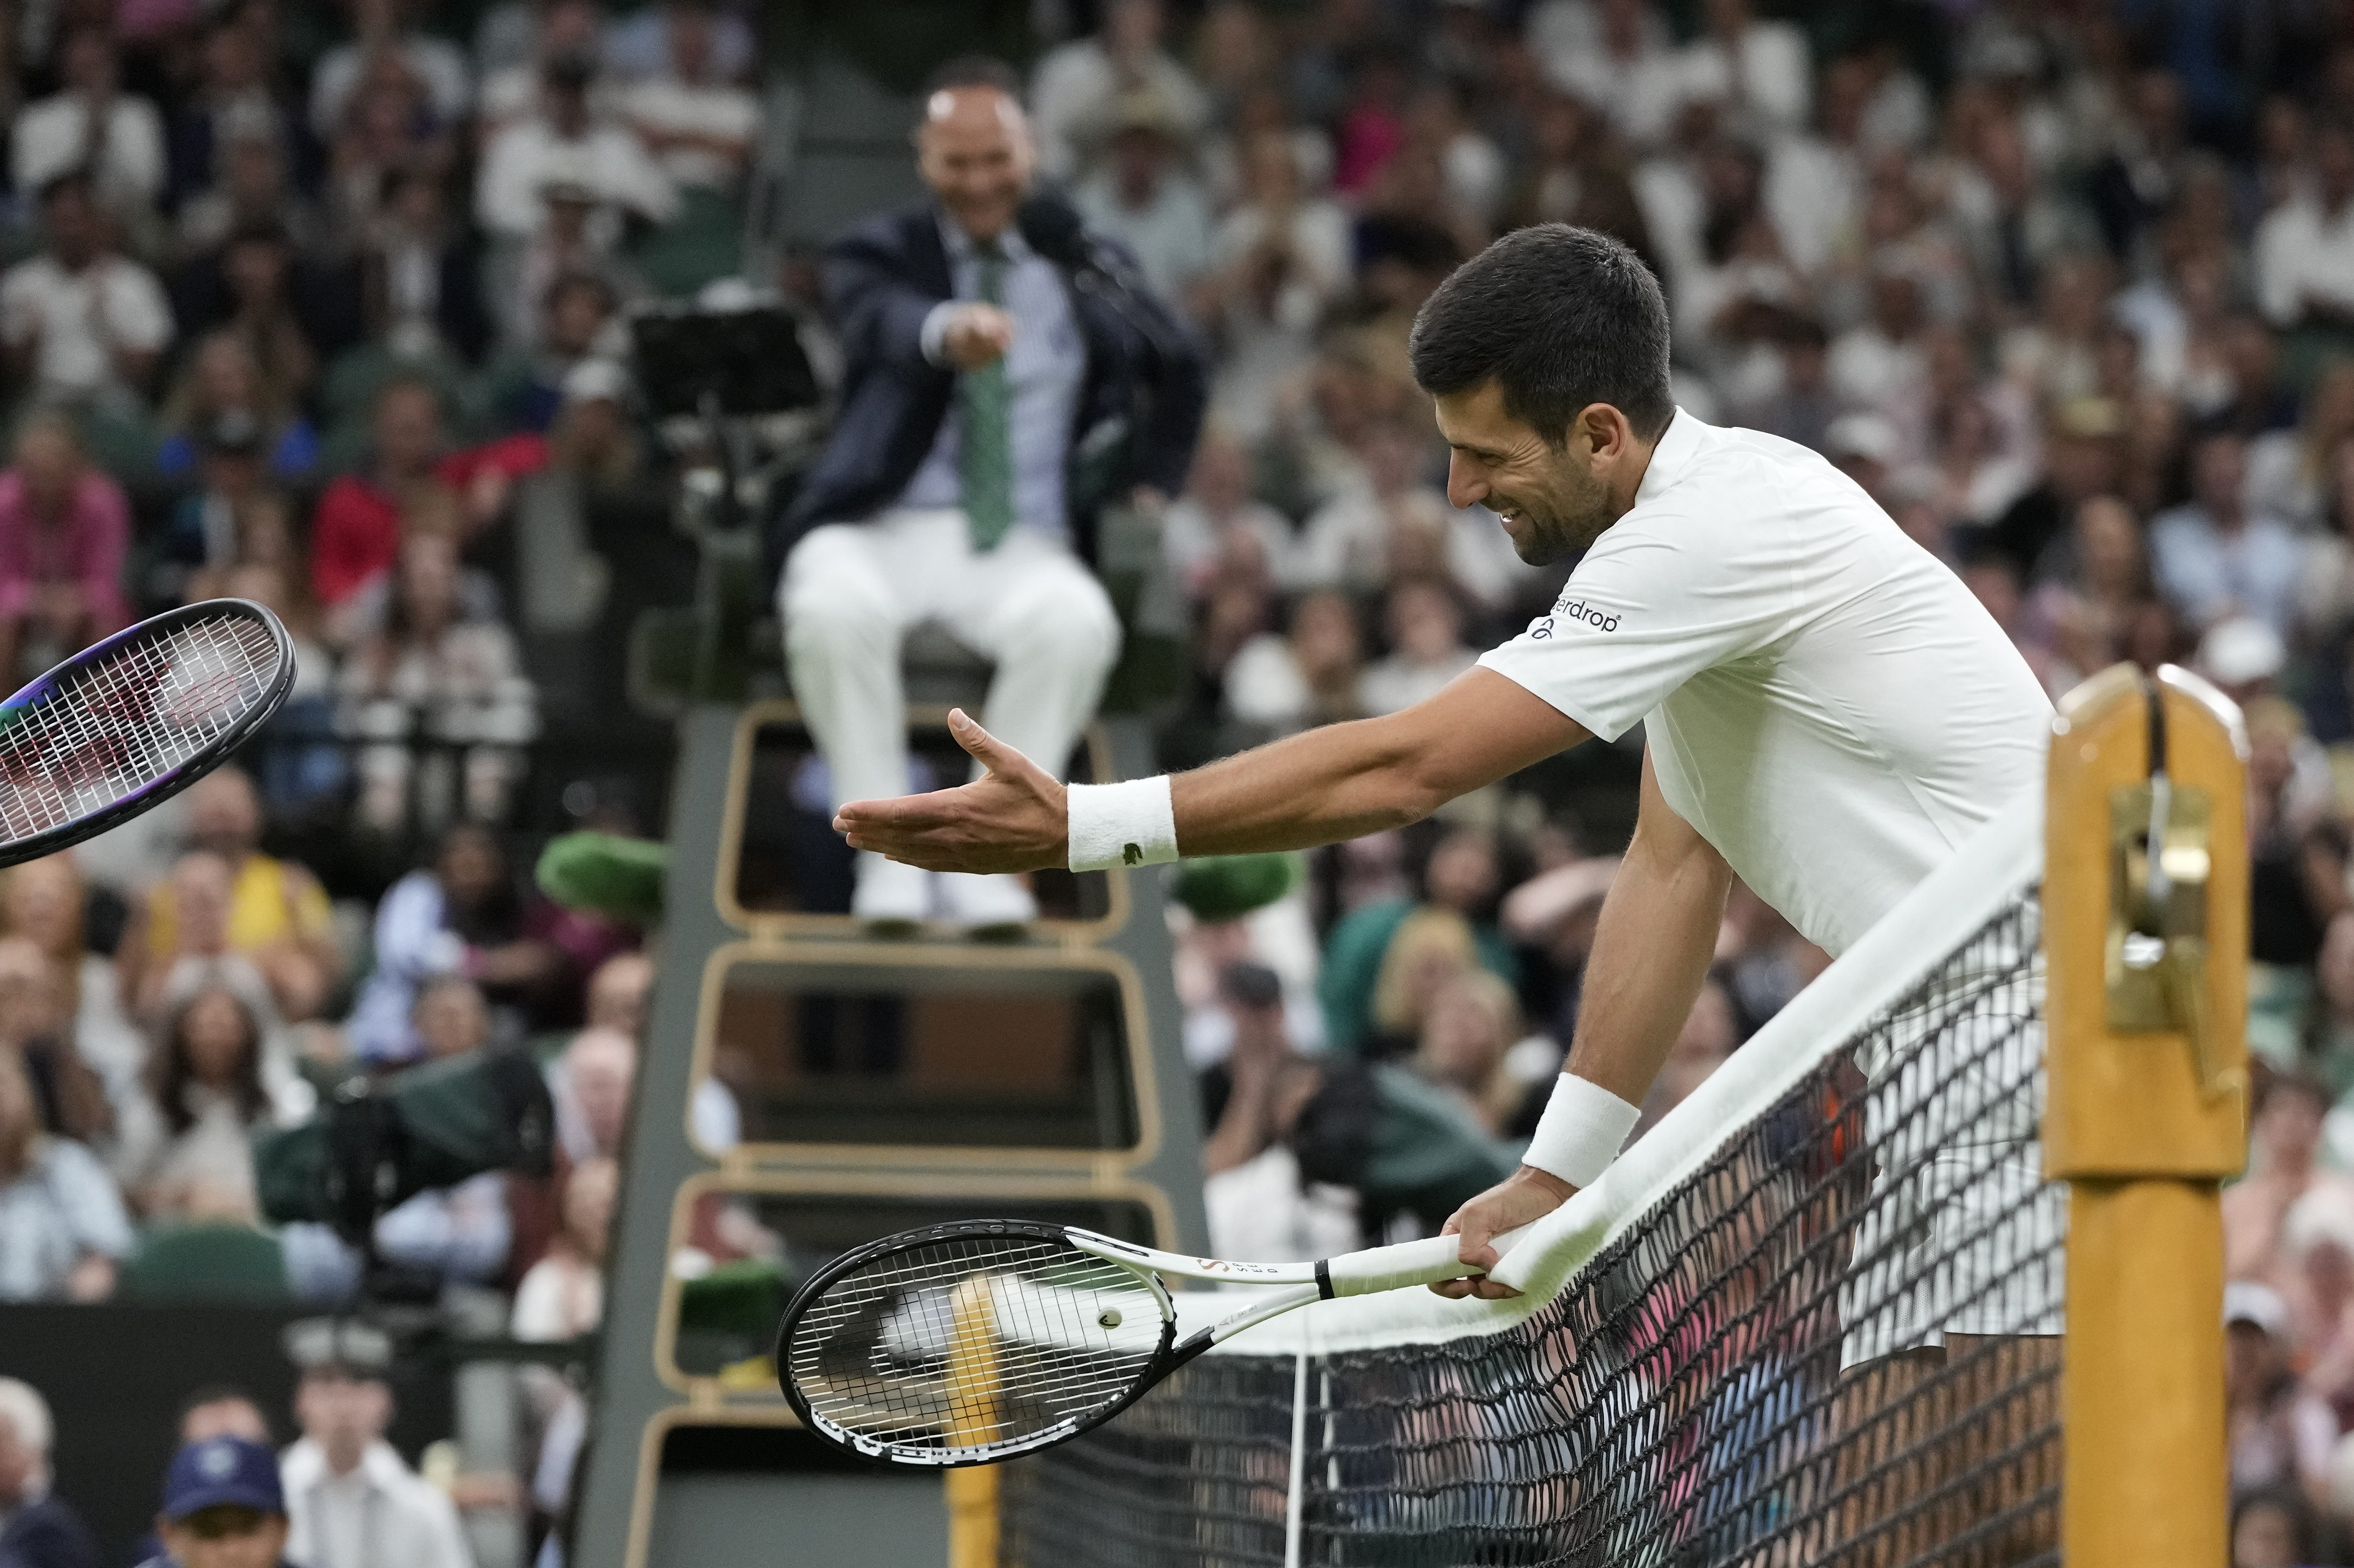 Novak Djokovics Wimbledon match against Hubert Hurkacz was suspended and will continue Monday